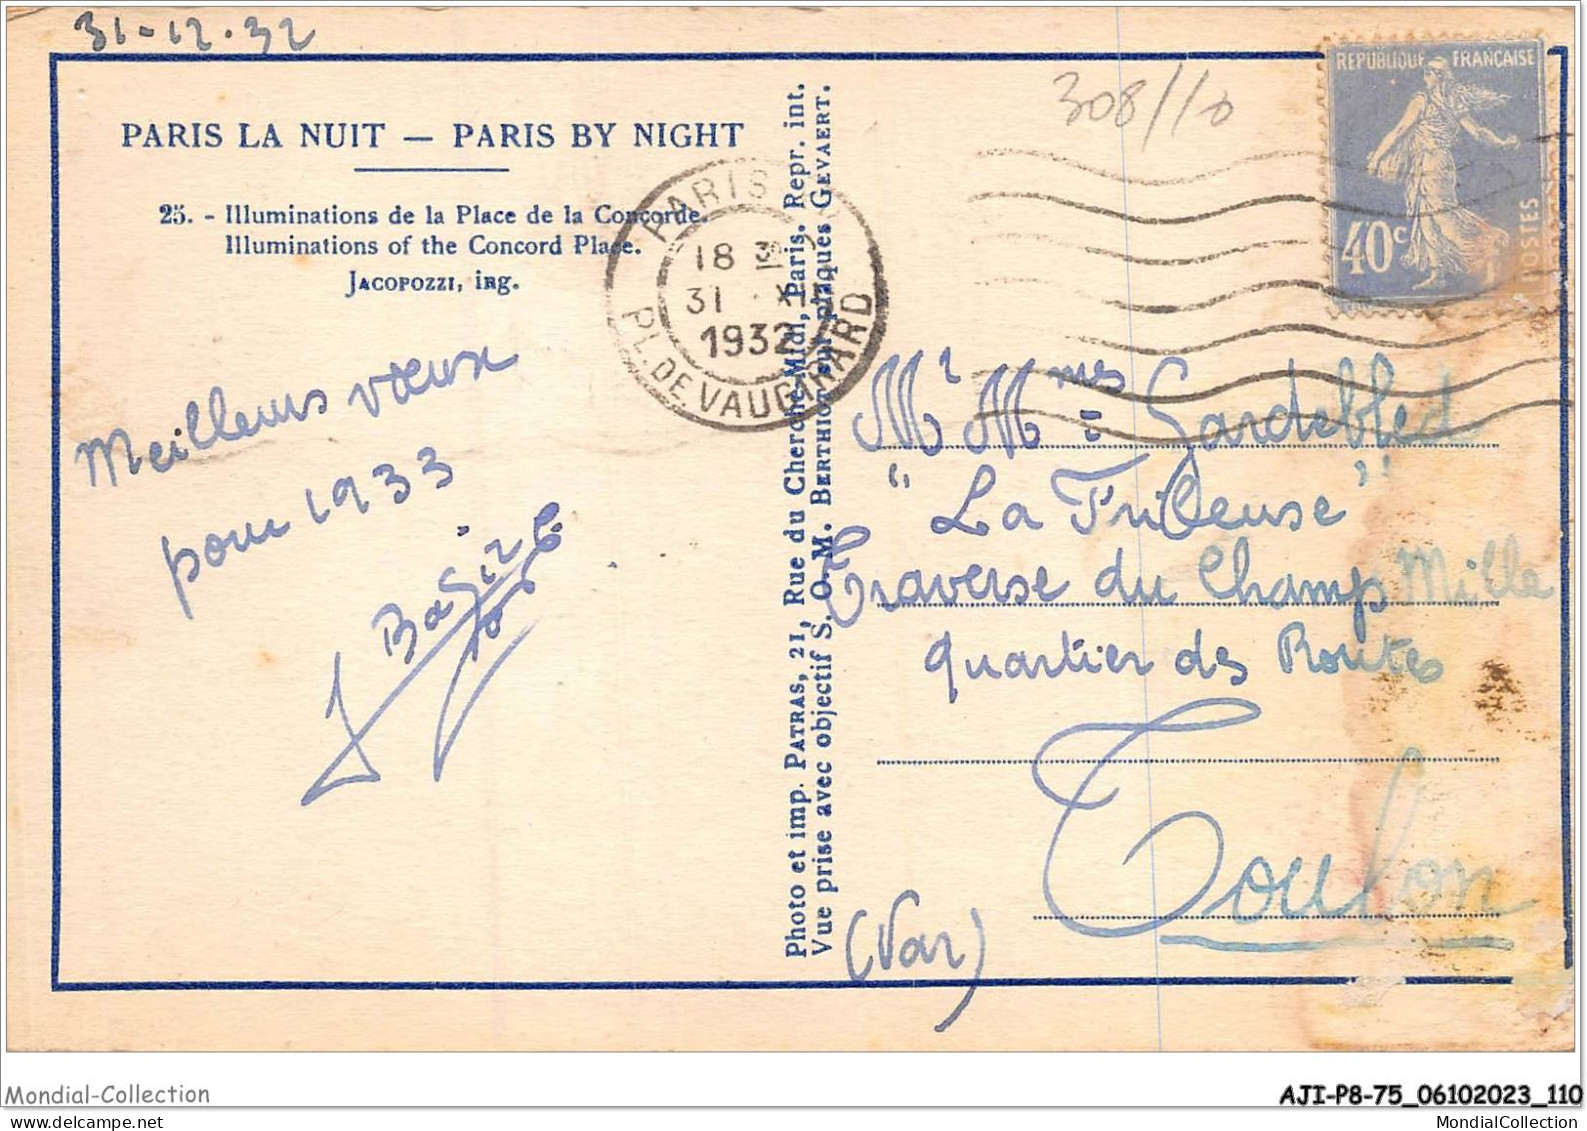 AJIP8-75-0865 - PARIS LA NUIT - Illuminations De La Place De La Concorde - Parigi By Night